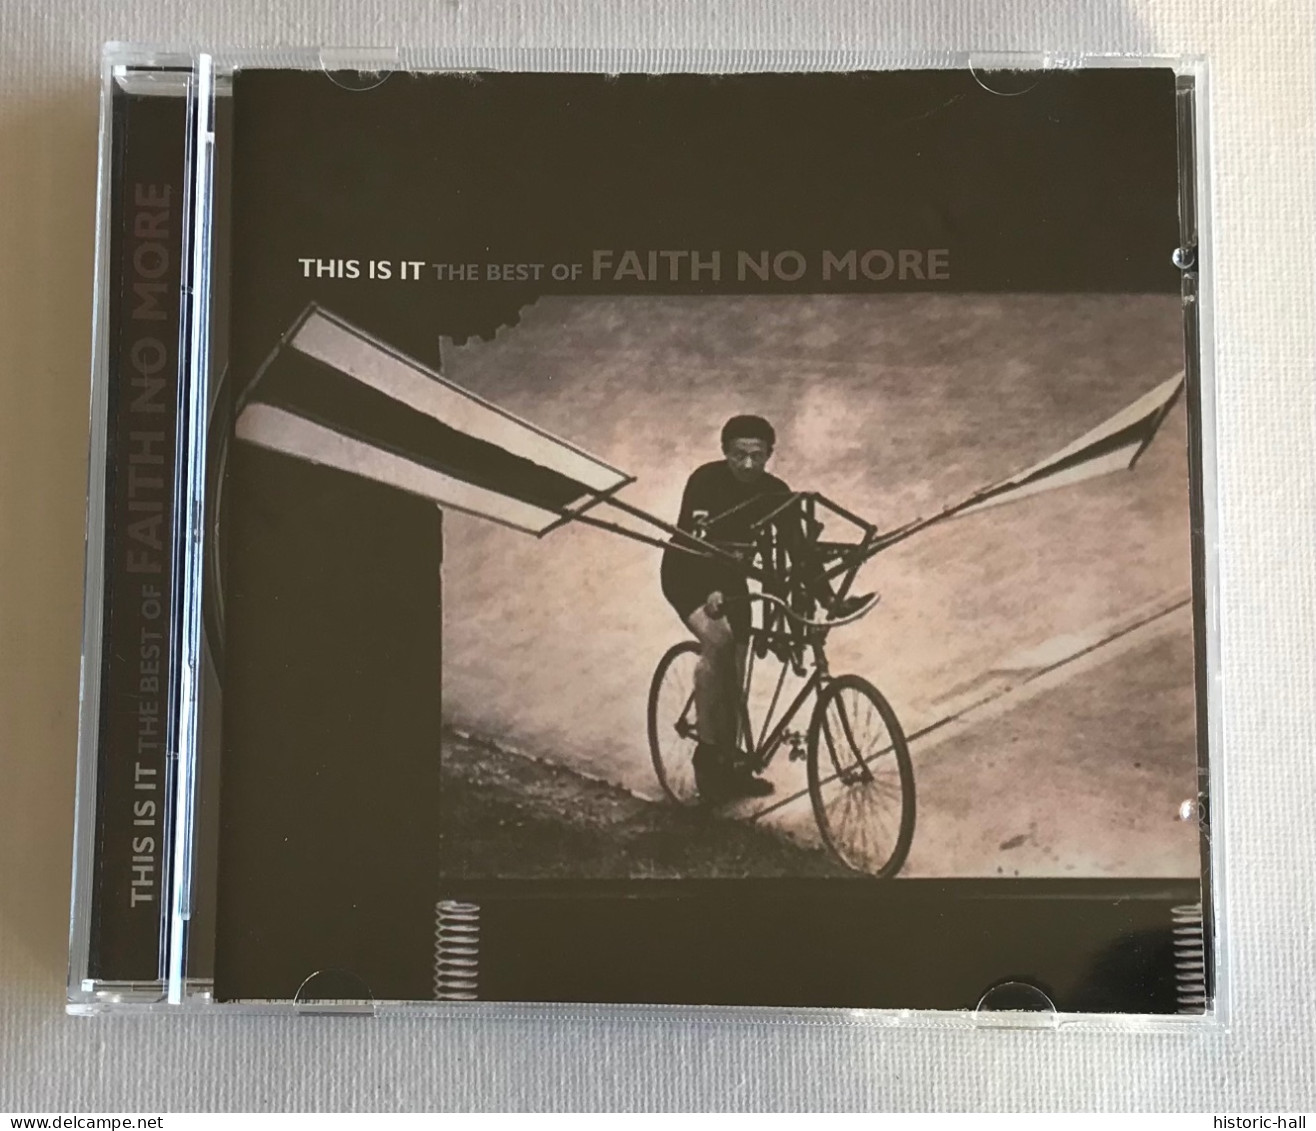 FAITH NO MORE - This Is It - CD - 2003 - Russian Press - Hard Rock En Metal